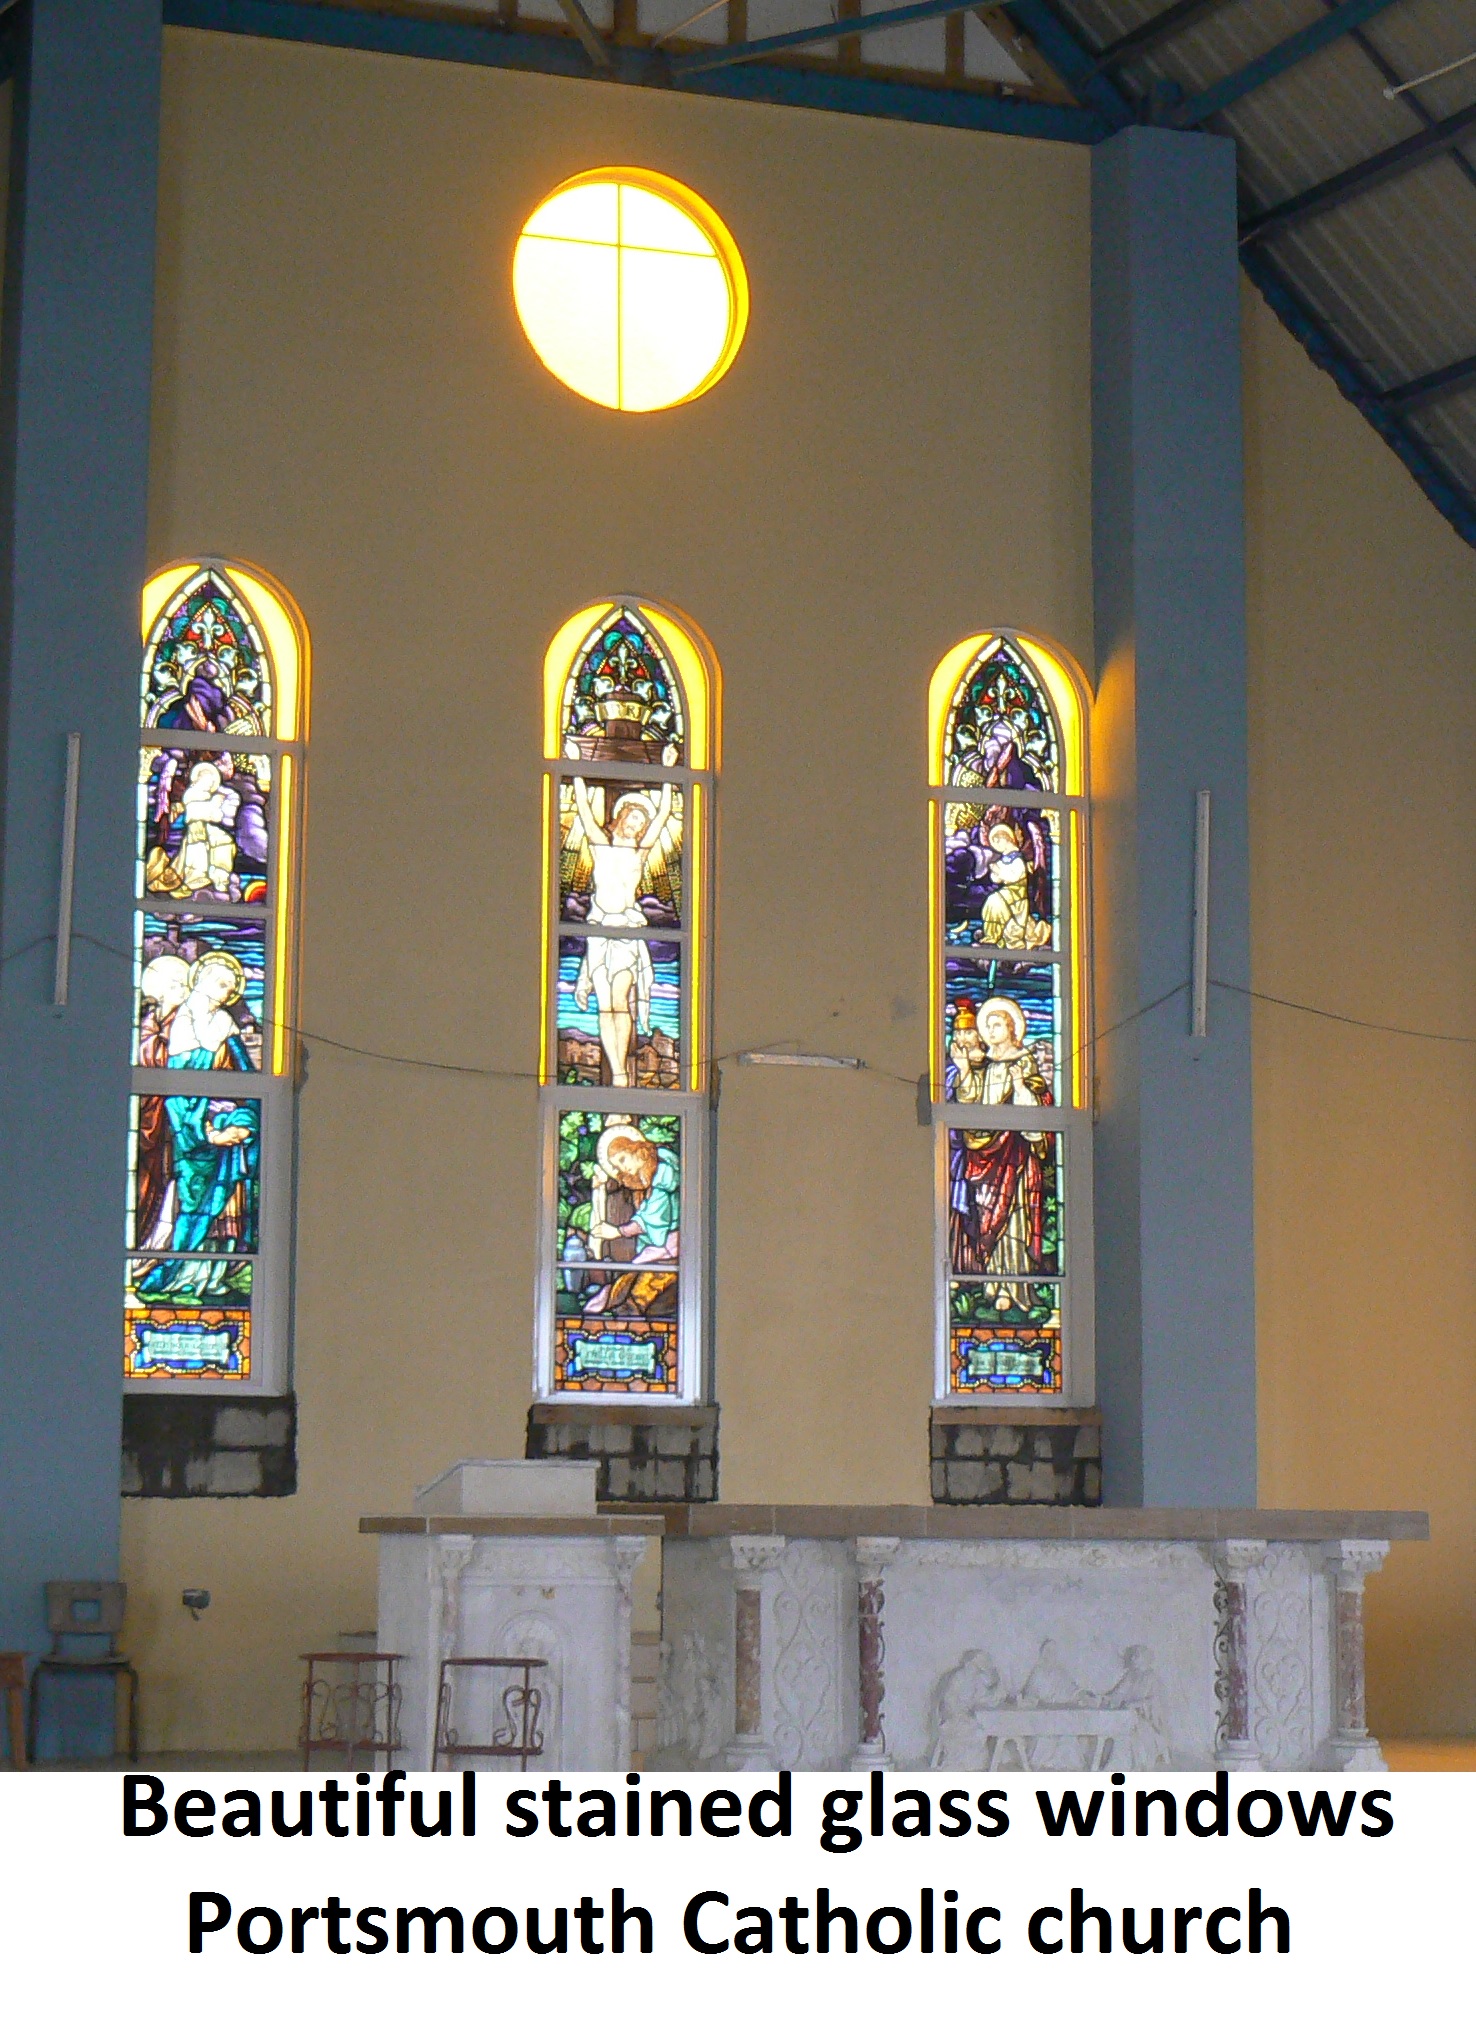 beautiful stained glass windows PTH church